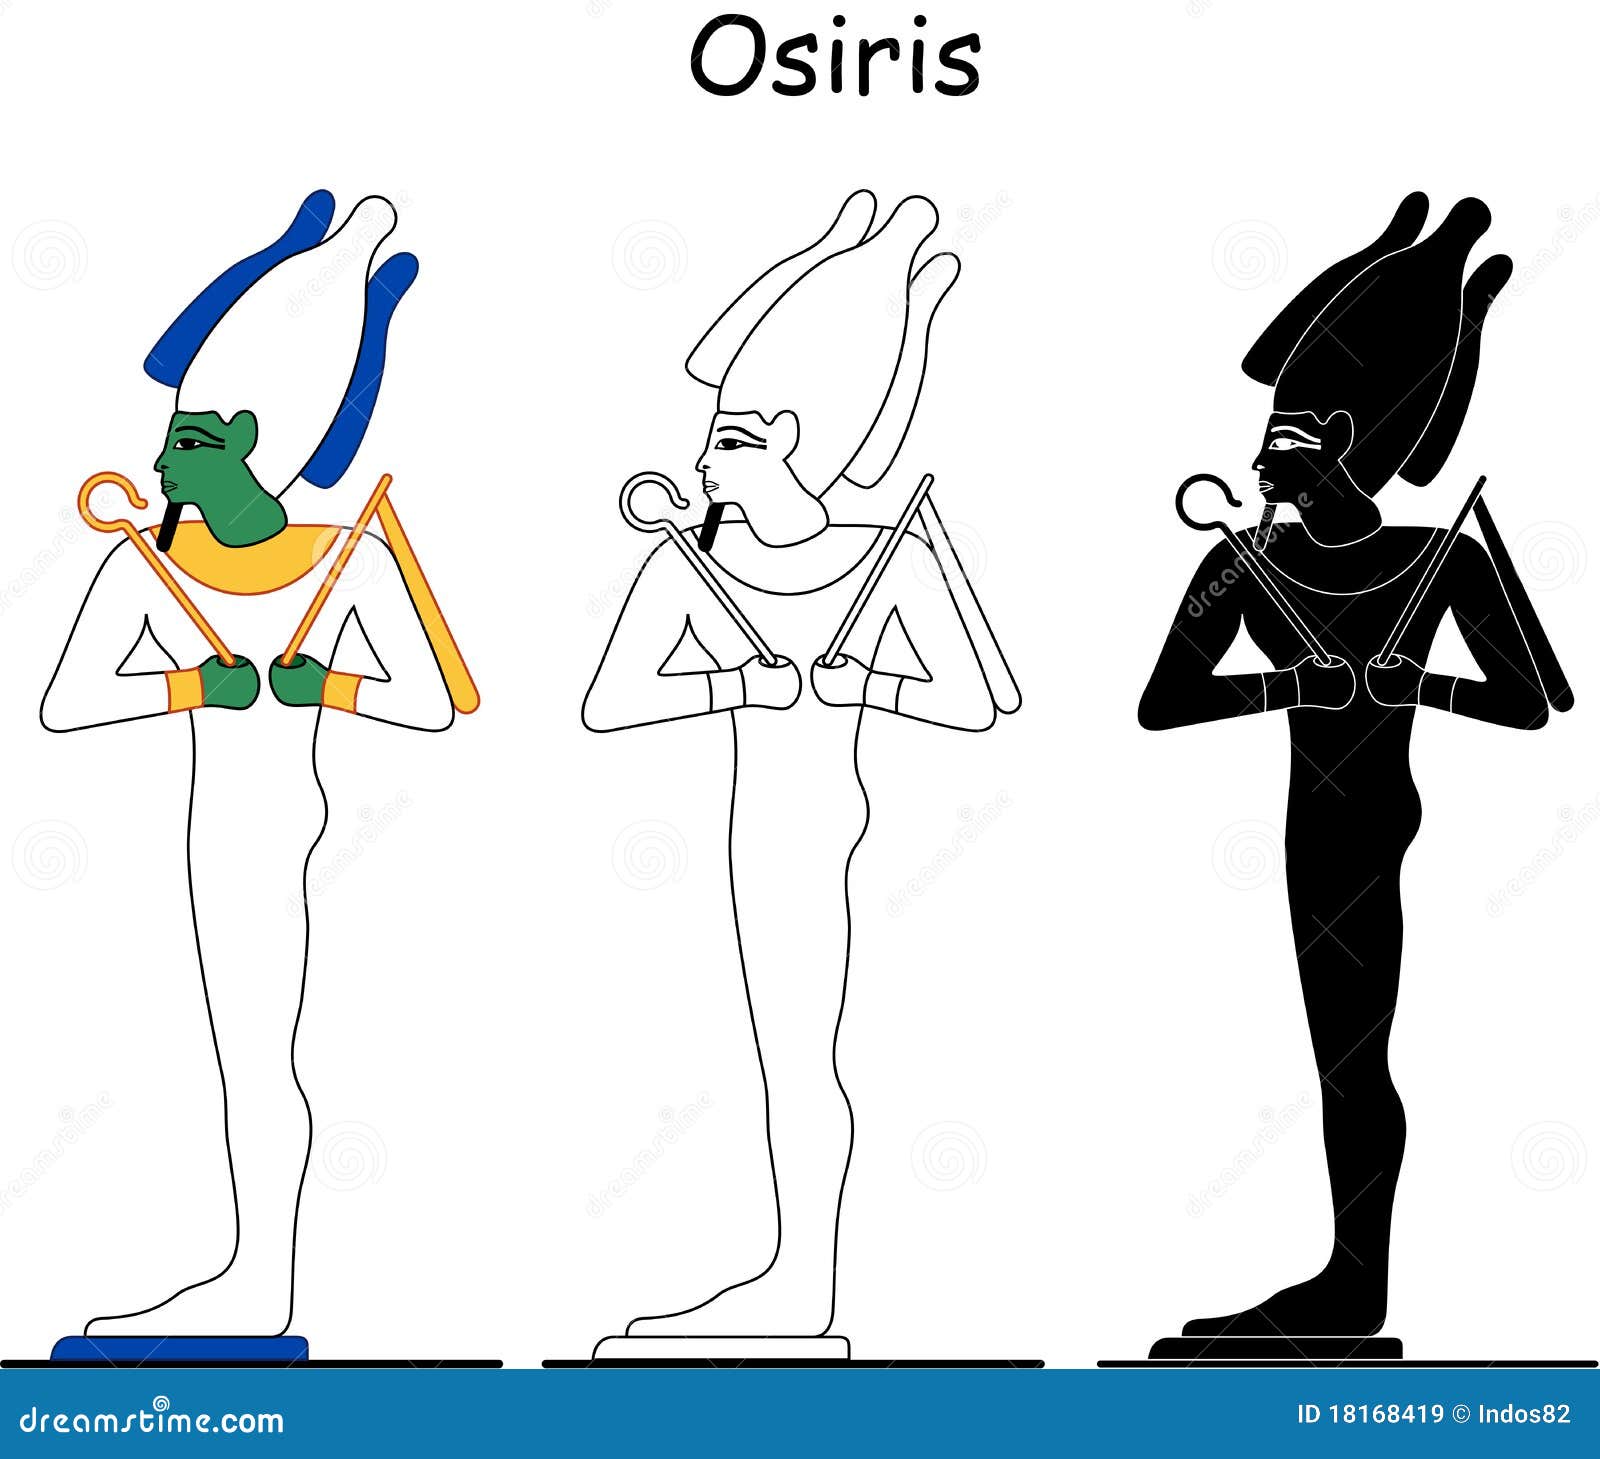 ancient egyptian god - osiris